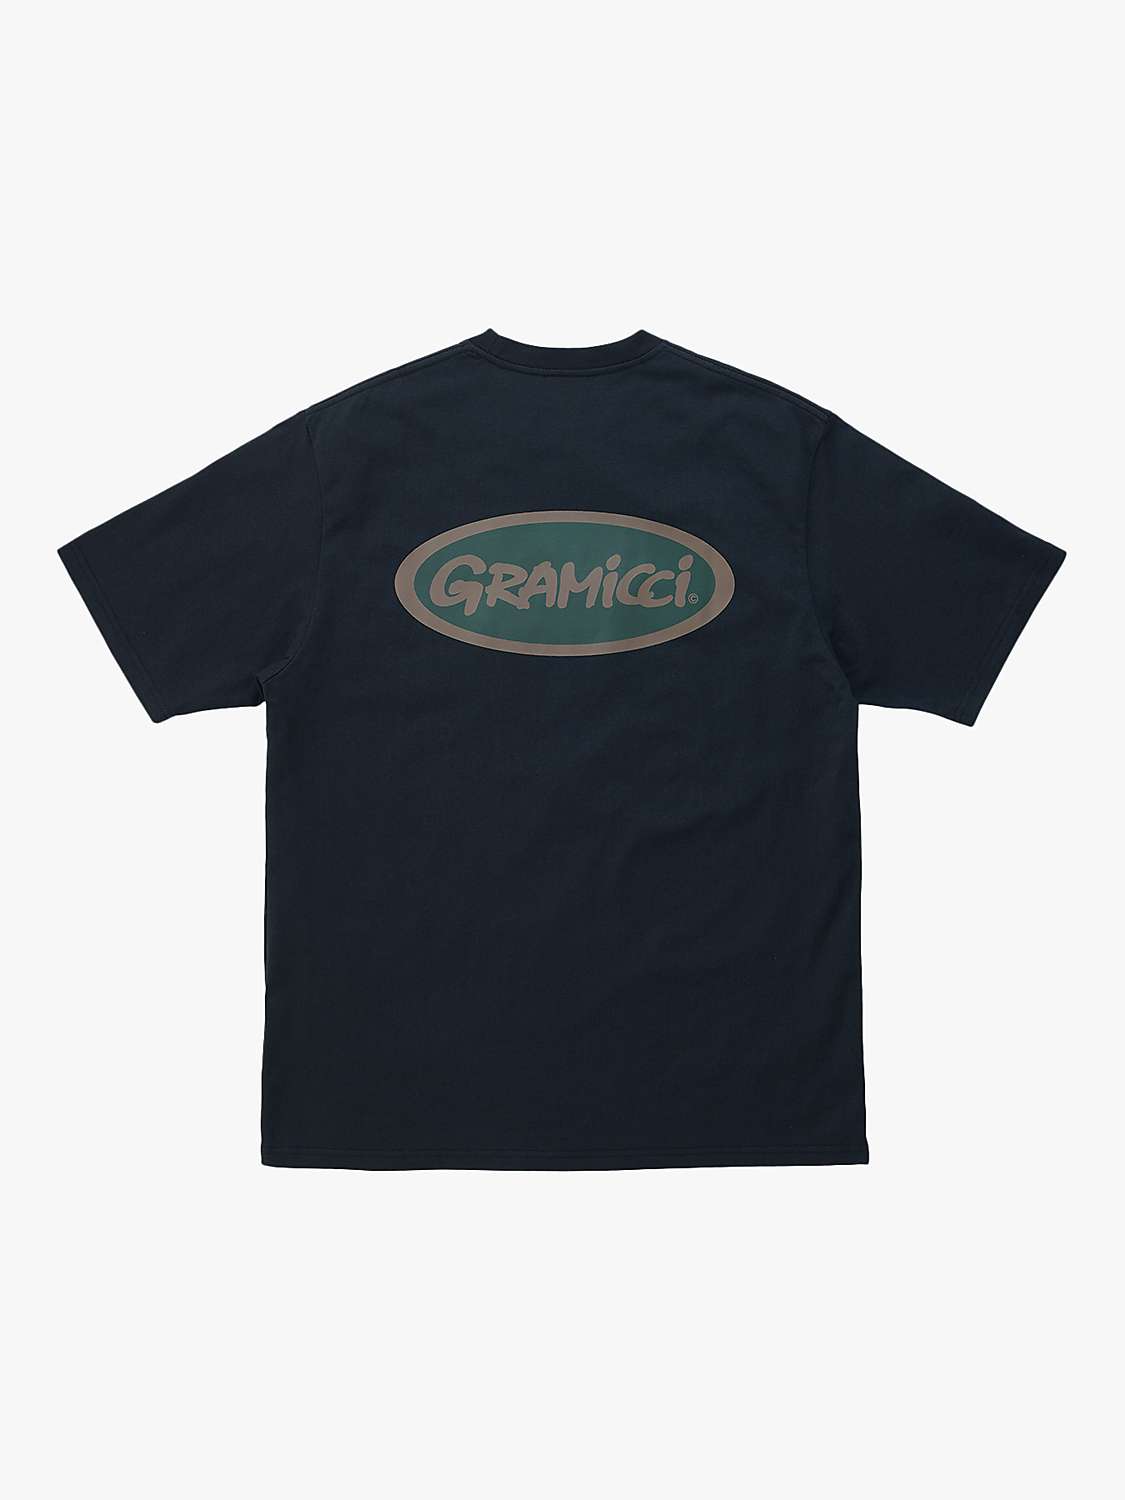 Buy Gramicci Oval Logo Organic Cotton T-Shirt, Black Online at johnlewis.com